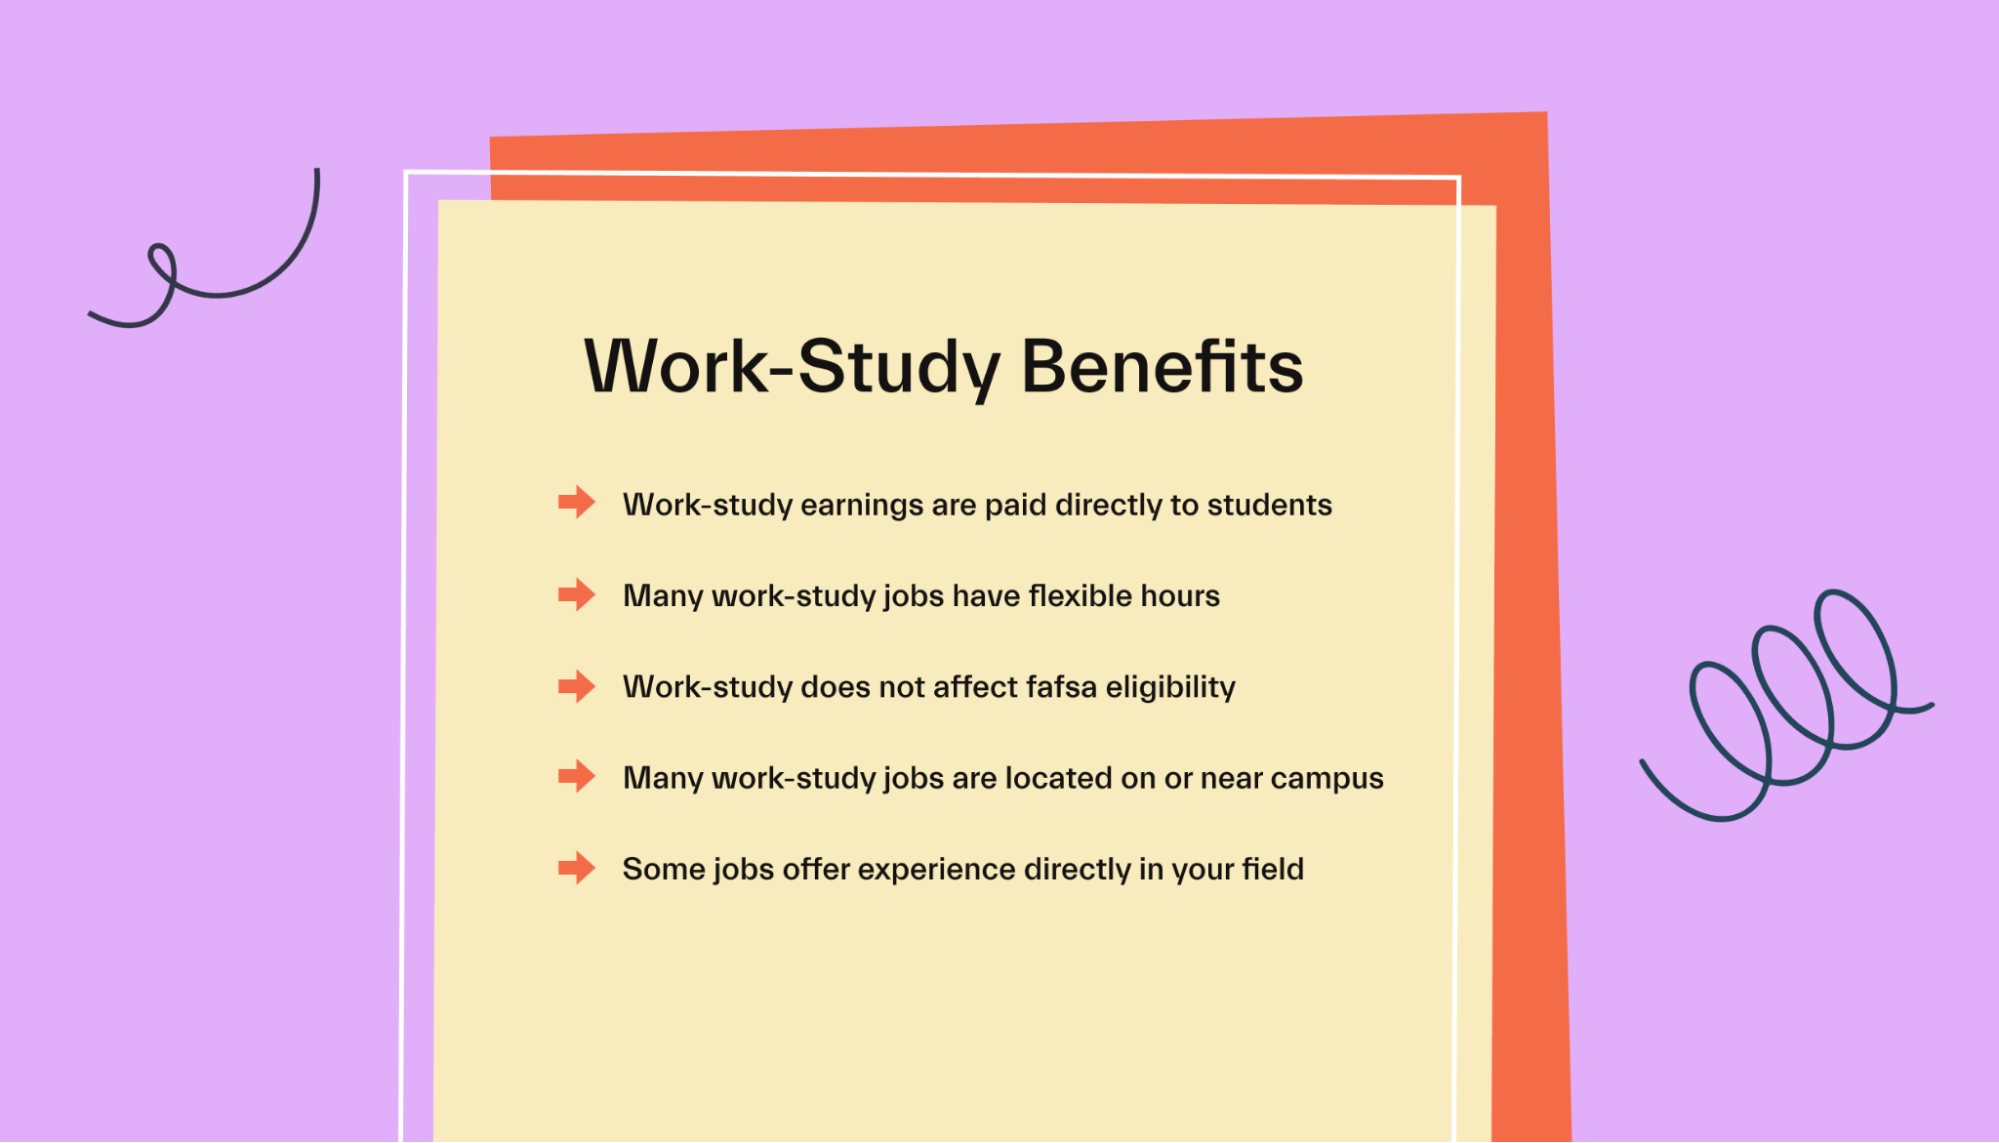 Work-study benefits